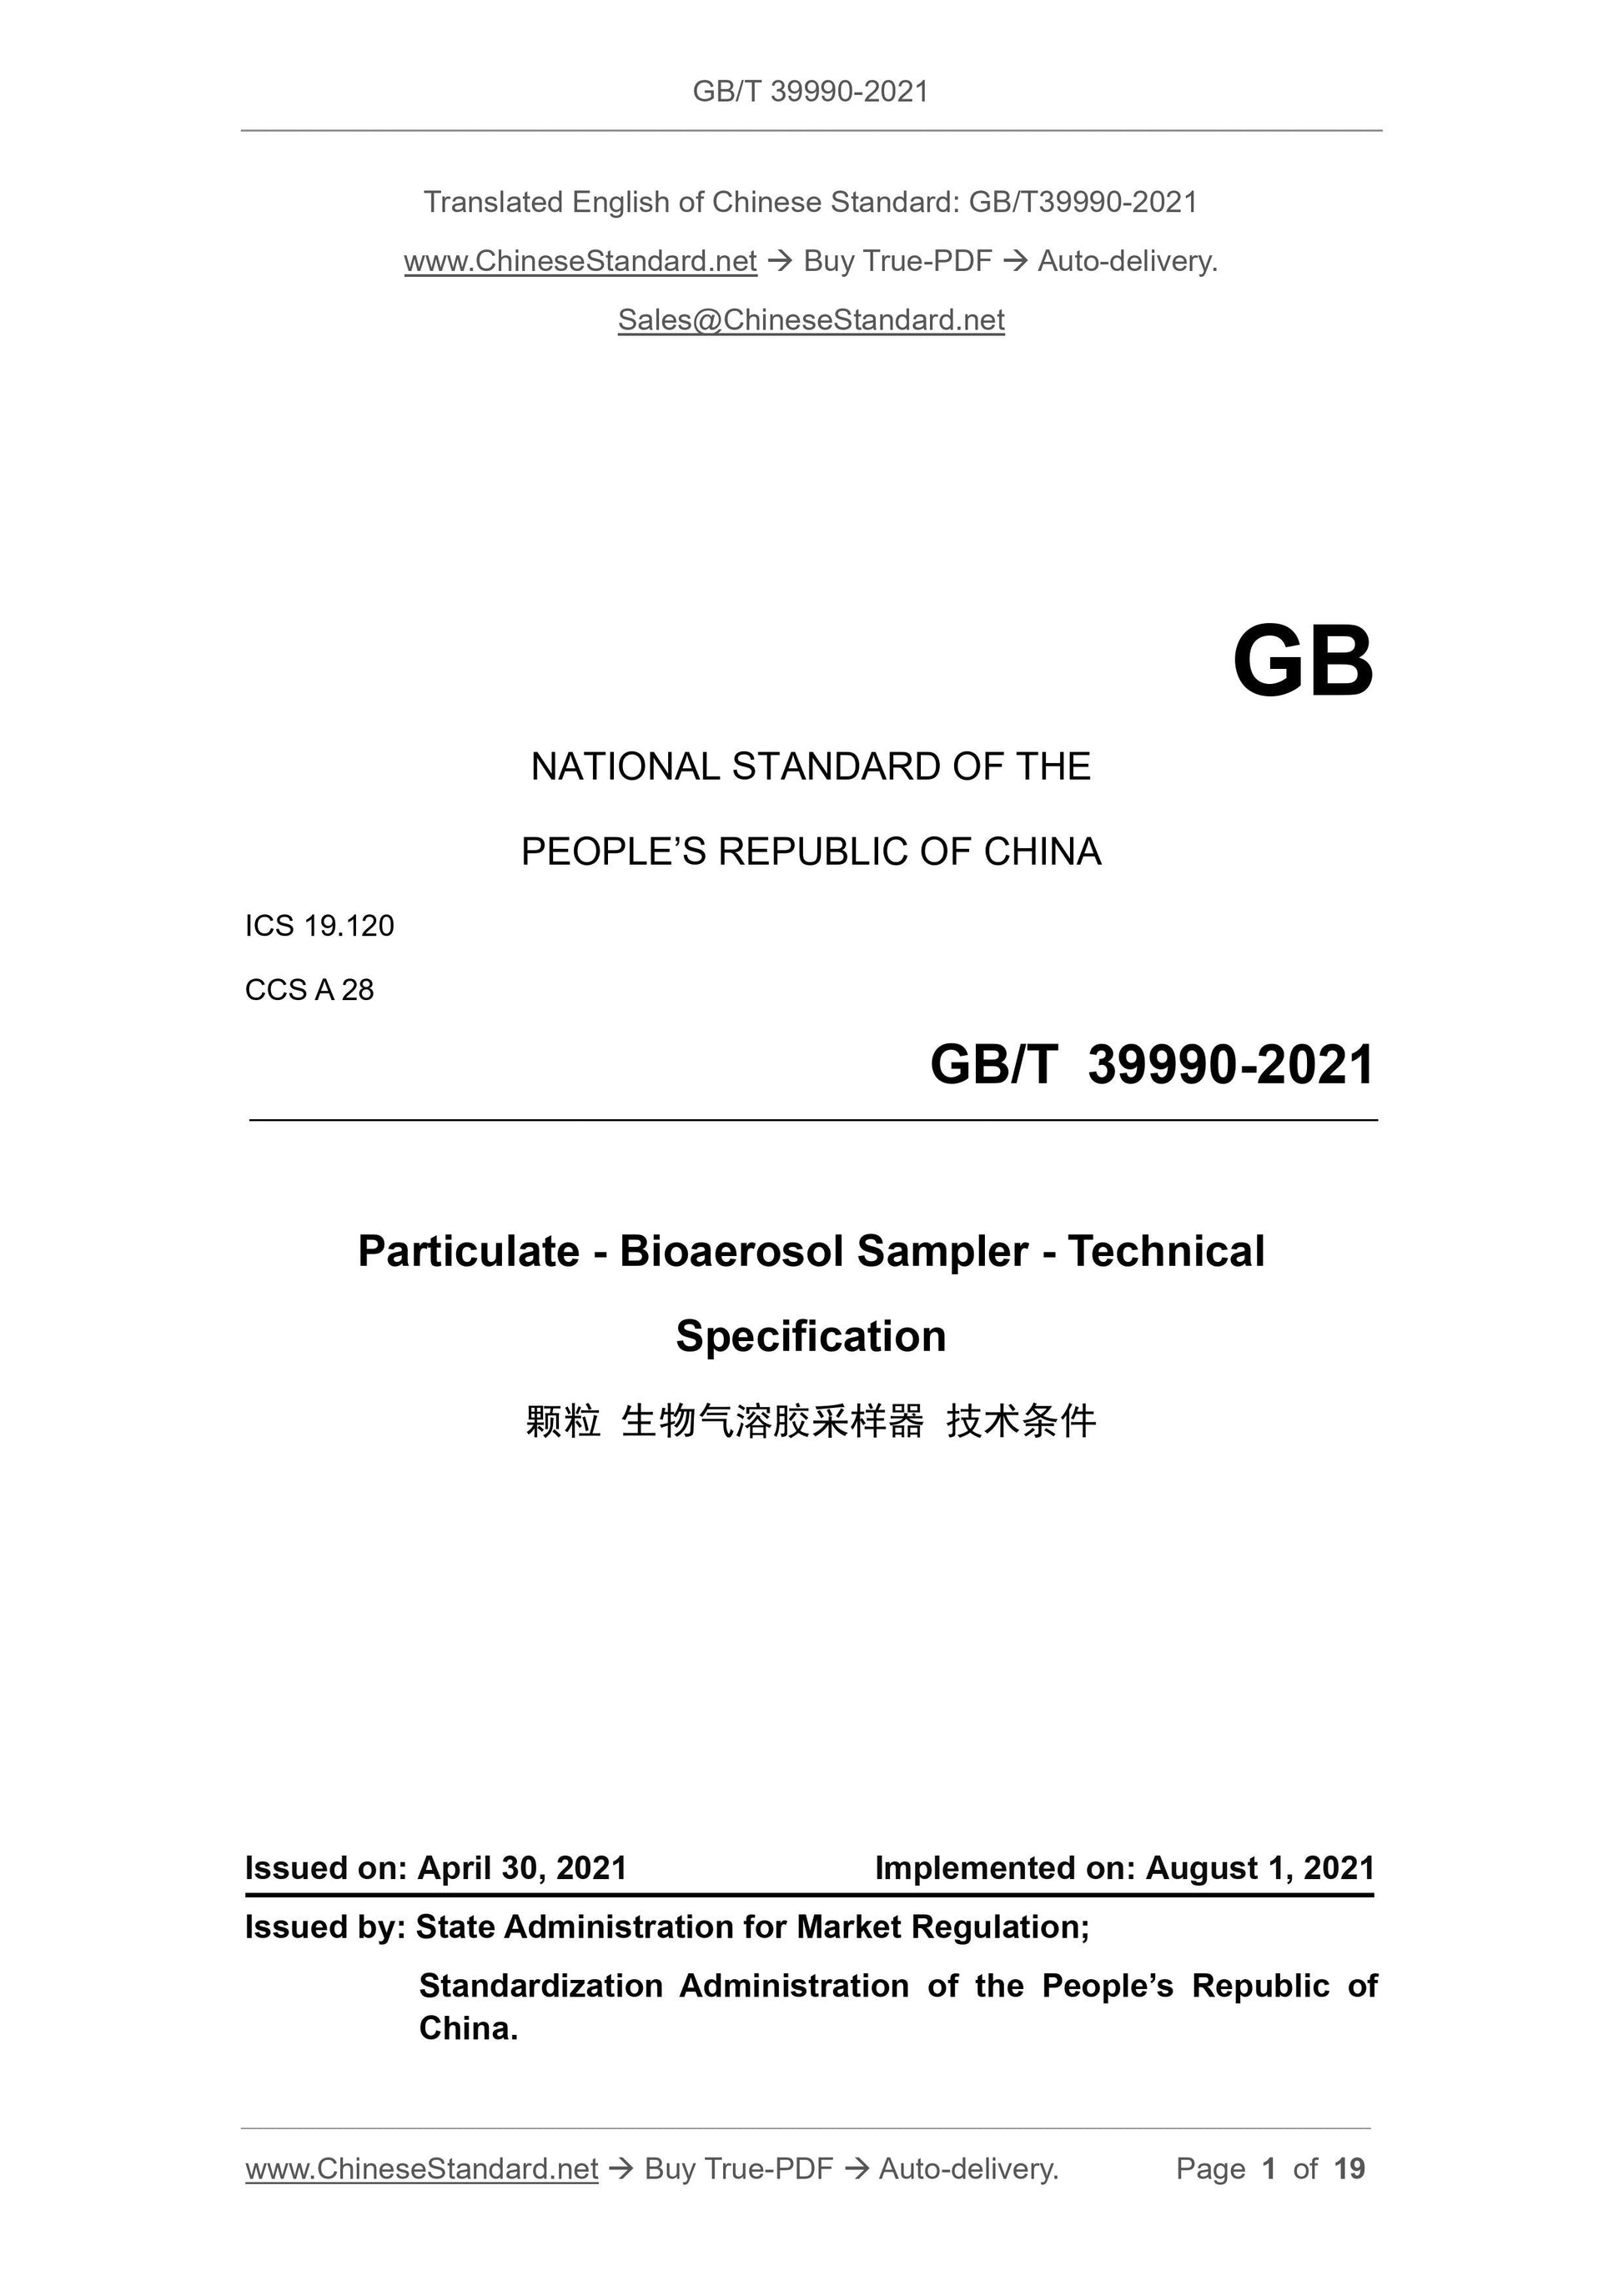 GBT39990-2021 Page 1